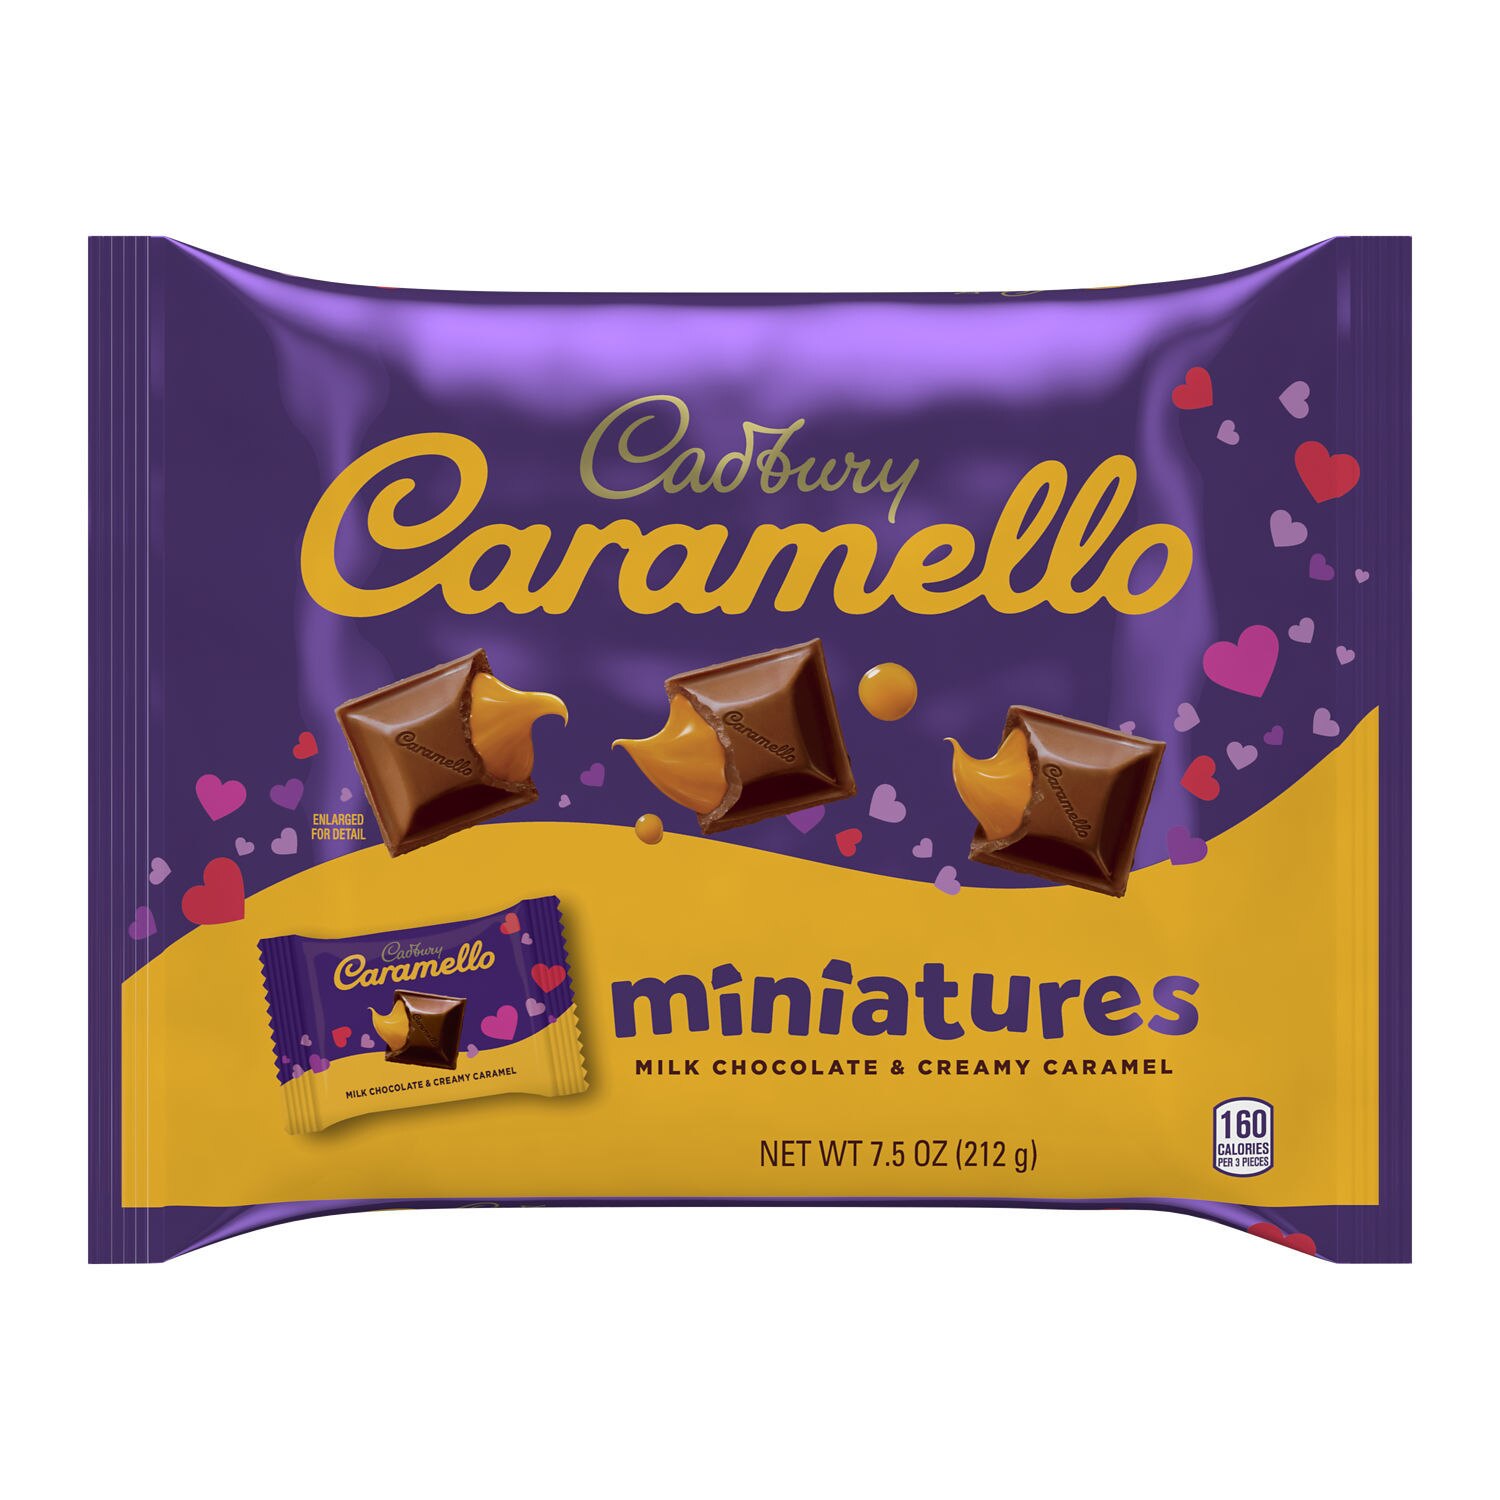 Cadbury Caramello Valentine's Milk Chocolate & Creamy Caramel Miniatures Candy Bars, 7.5 Oz , CVS